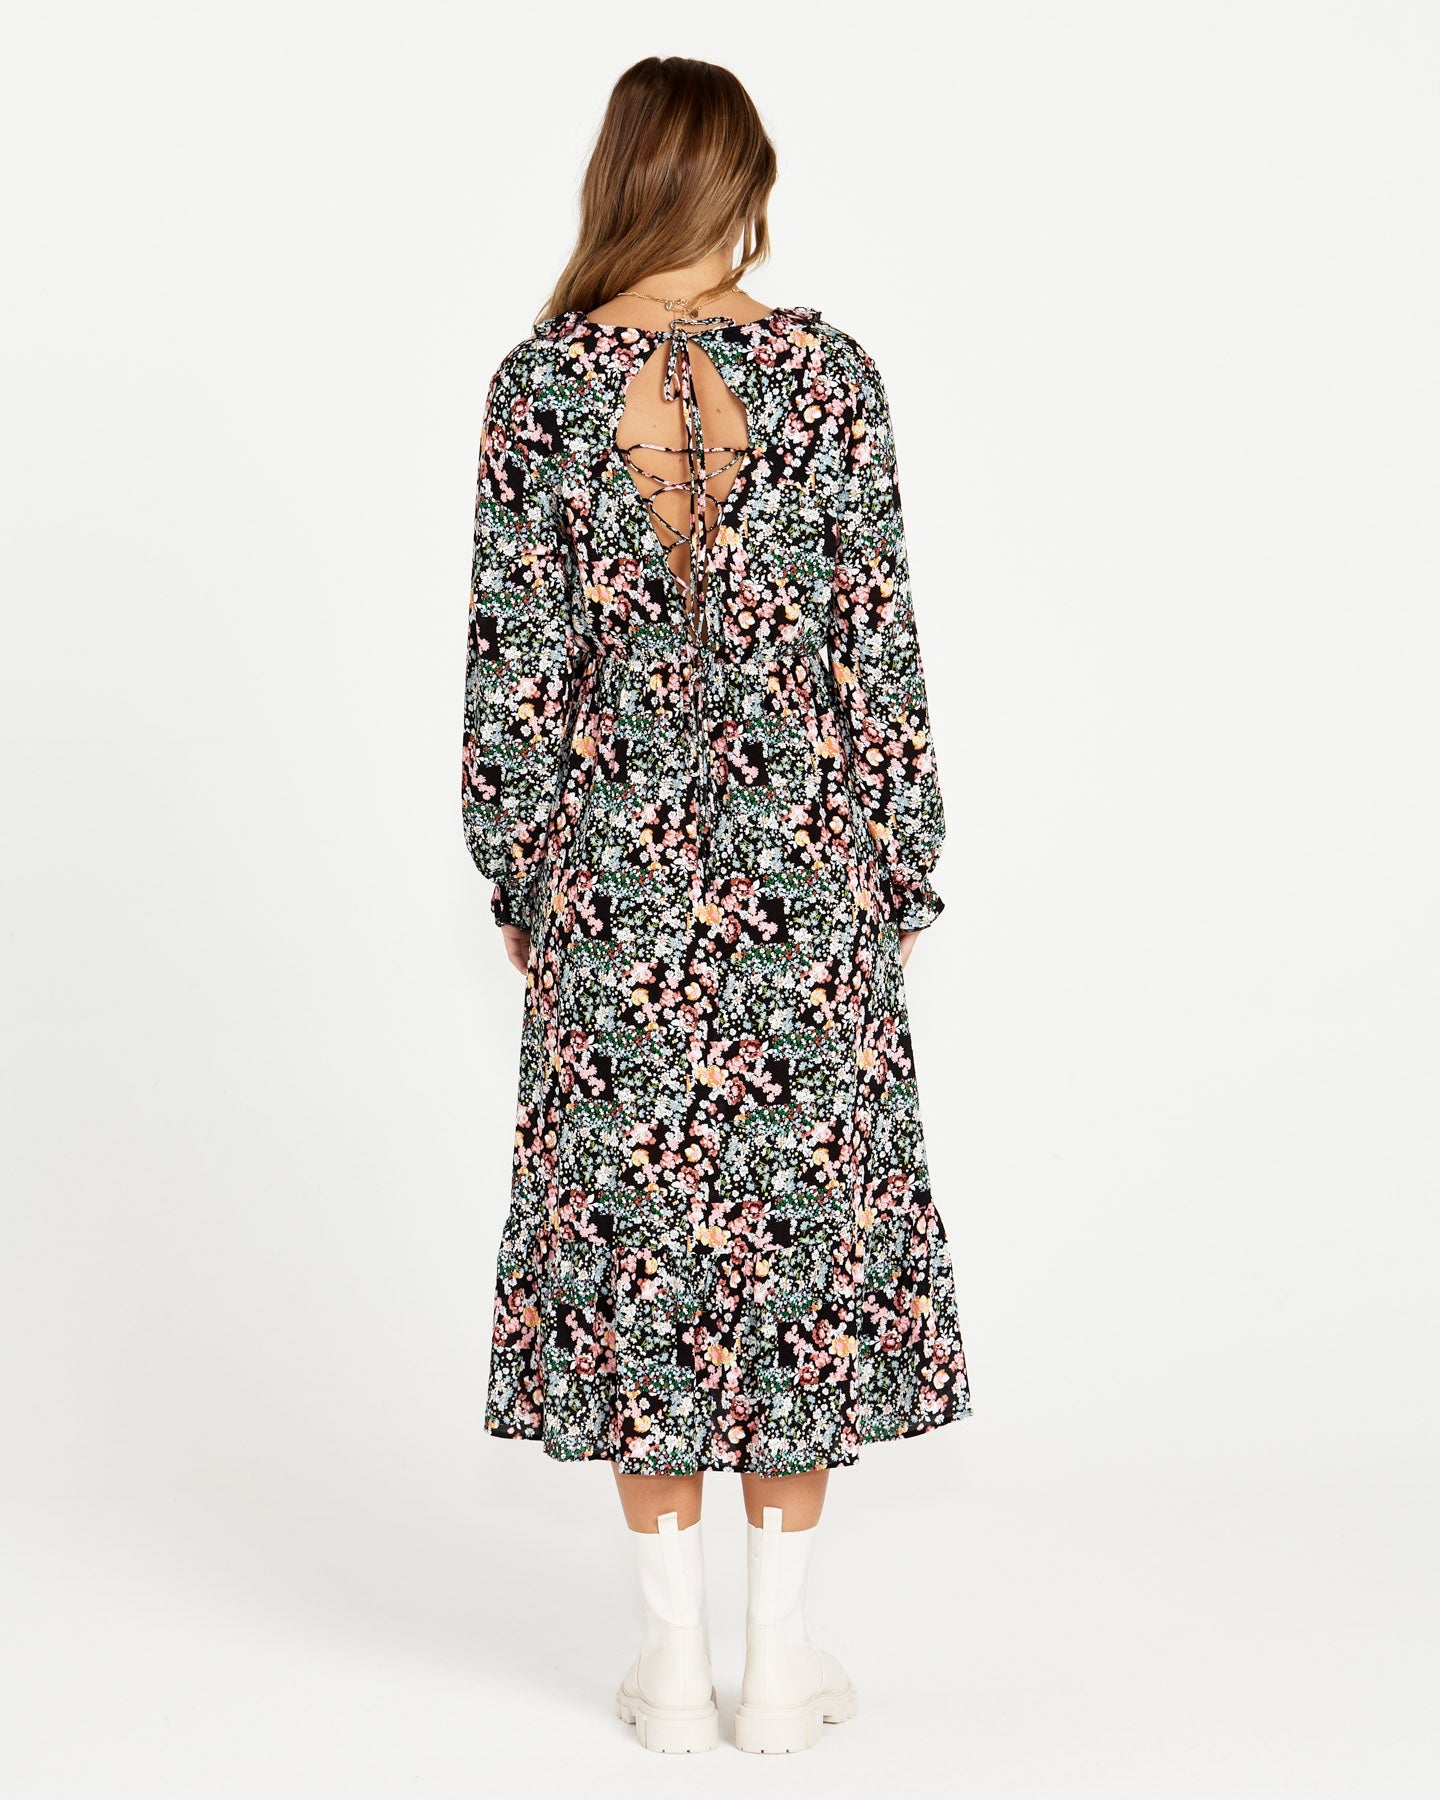 Sass June Long Sleeve Midi Dress - Patchwork Floral